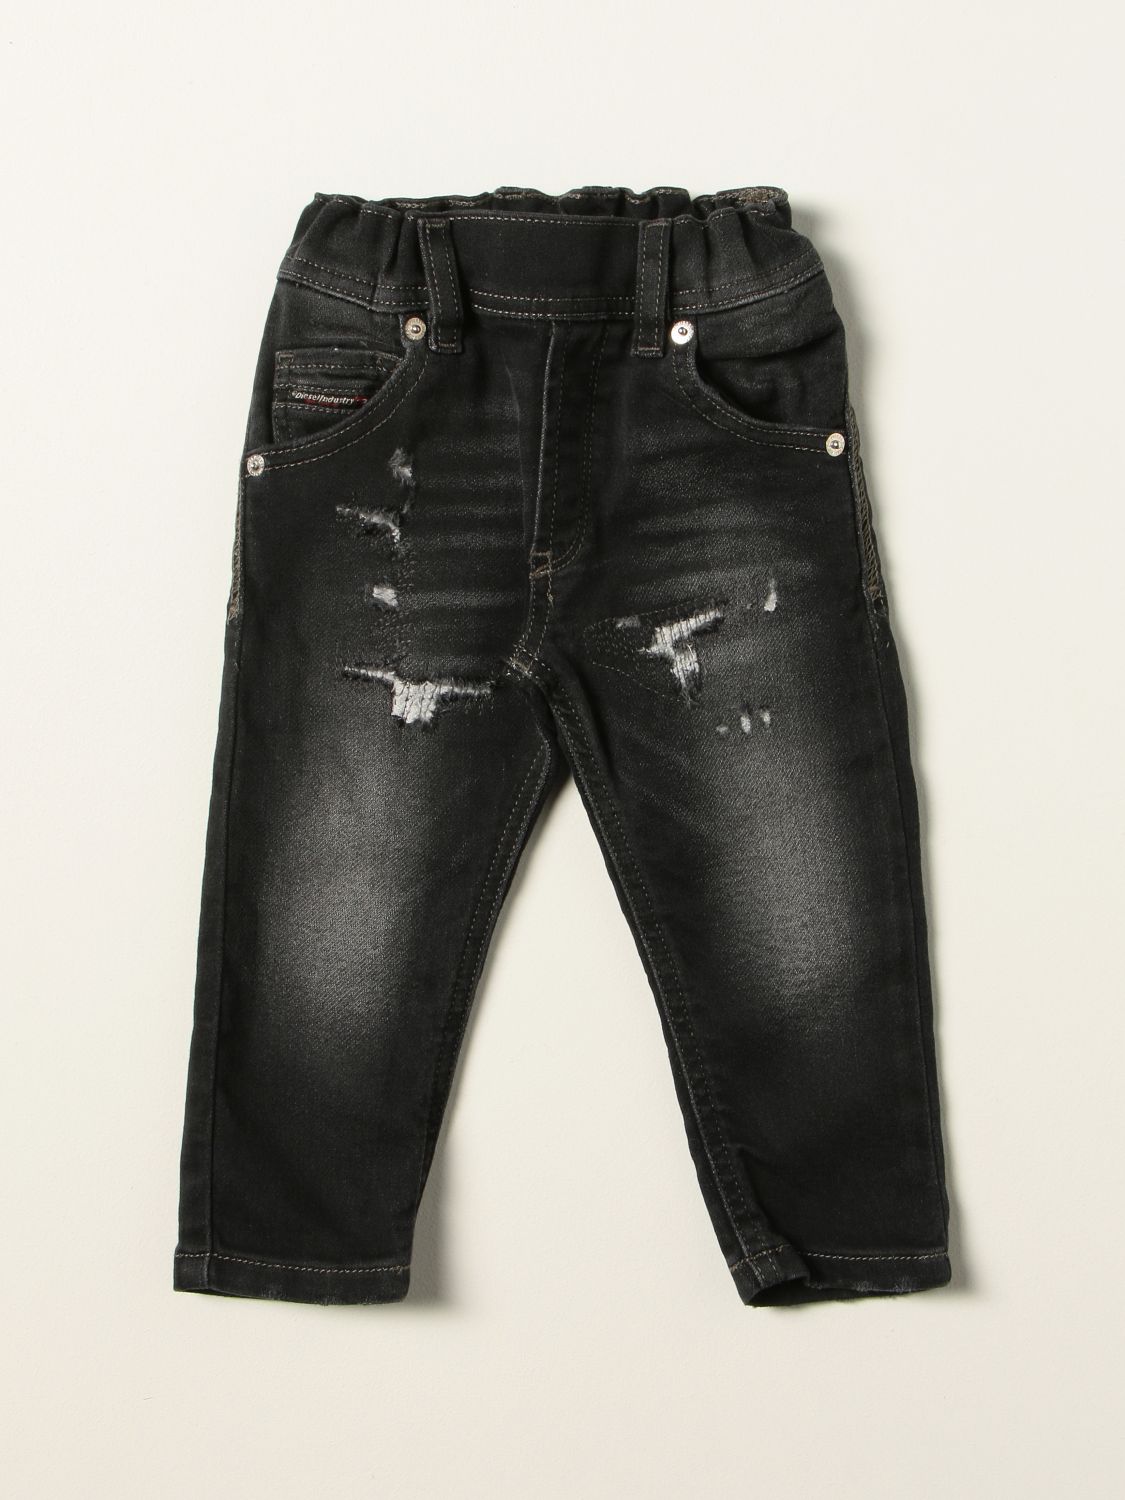 DIESEL: ripped jeans in washed denim - Black | Diesel jeans 00K1UF KXB9Q on GIGLIO.COM